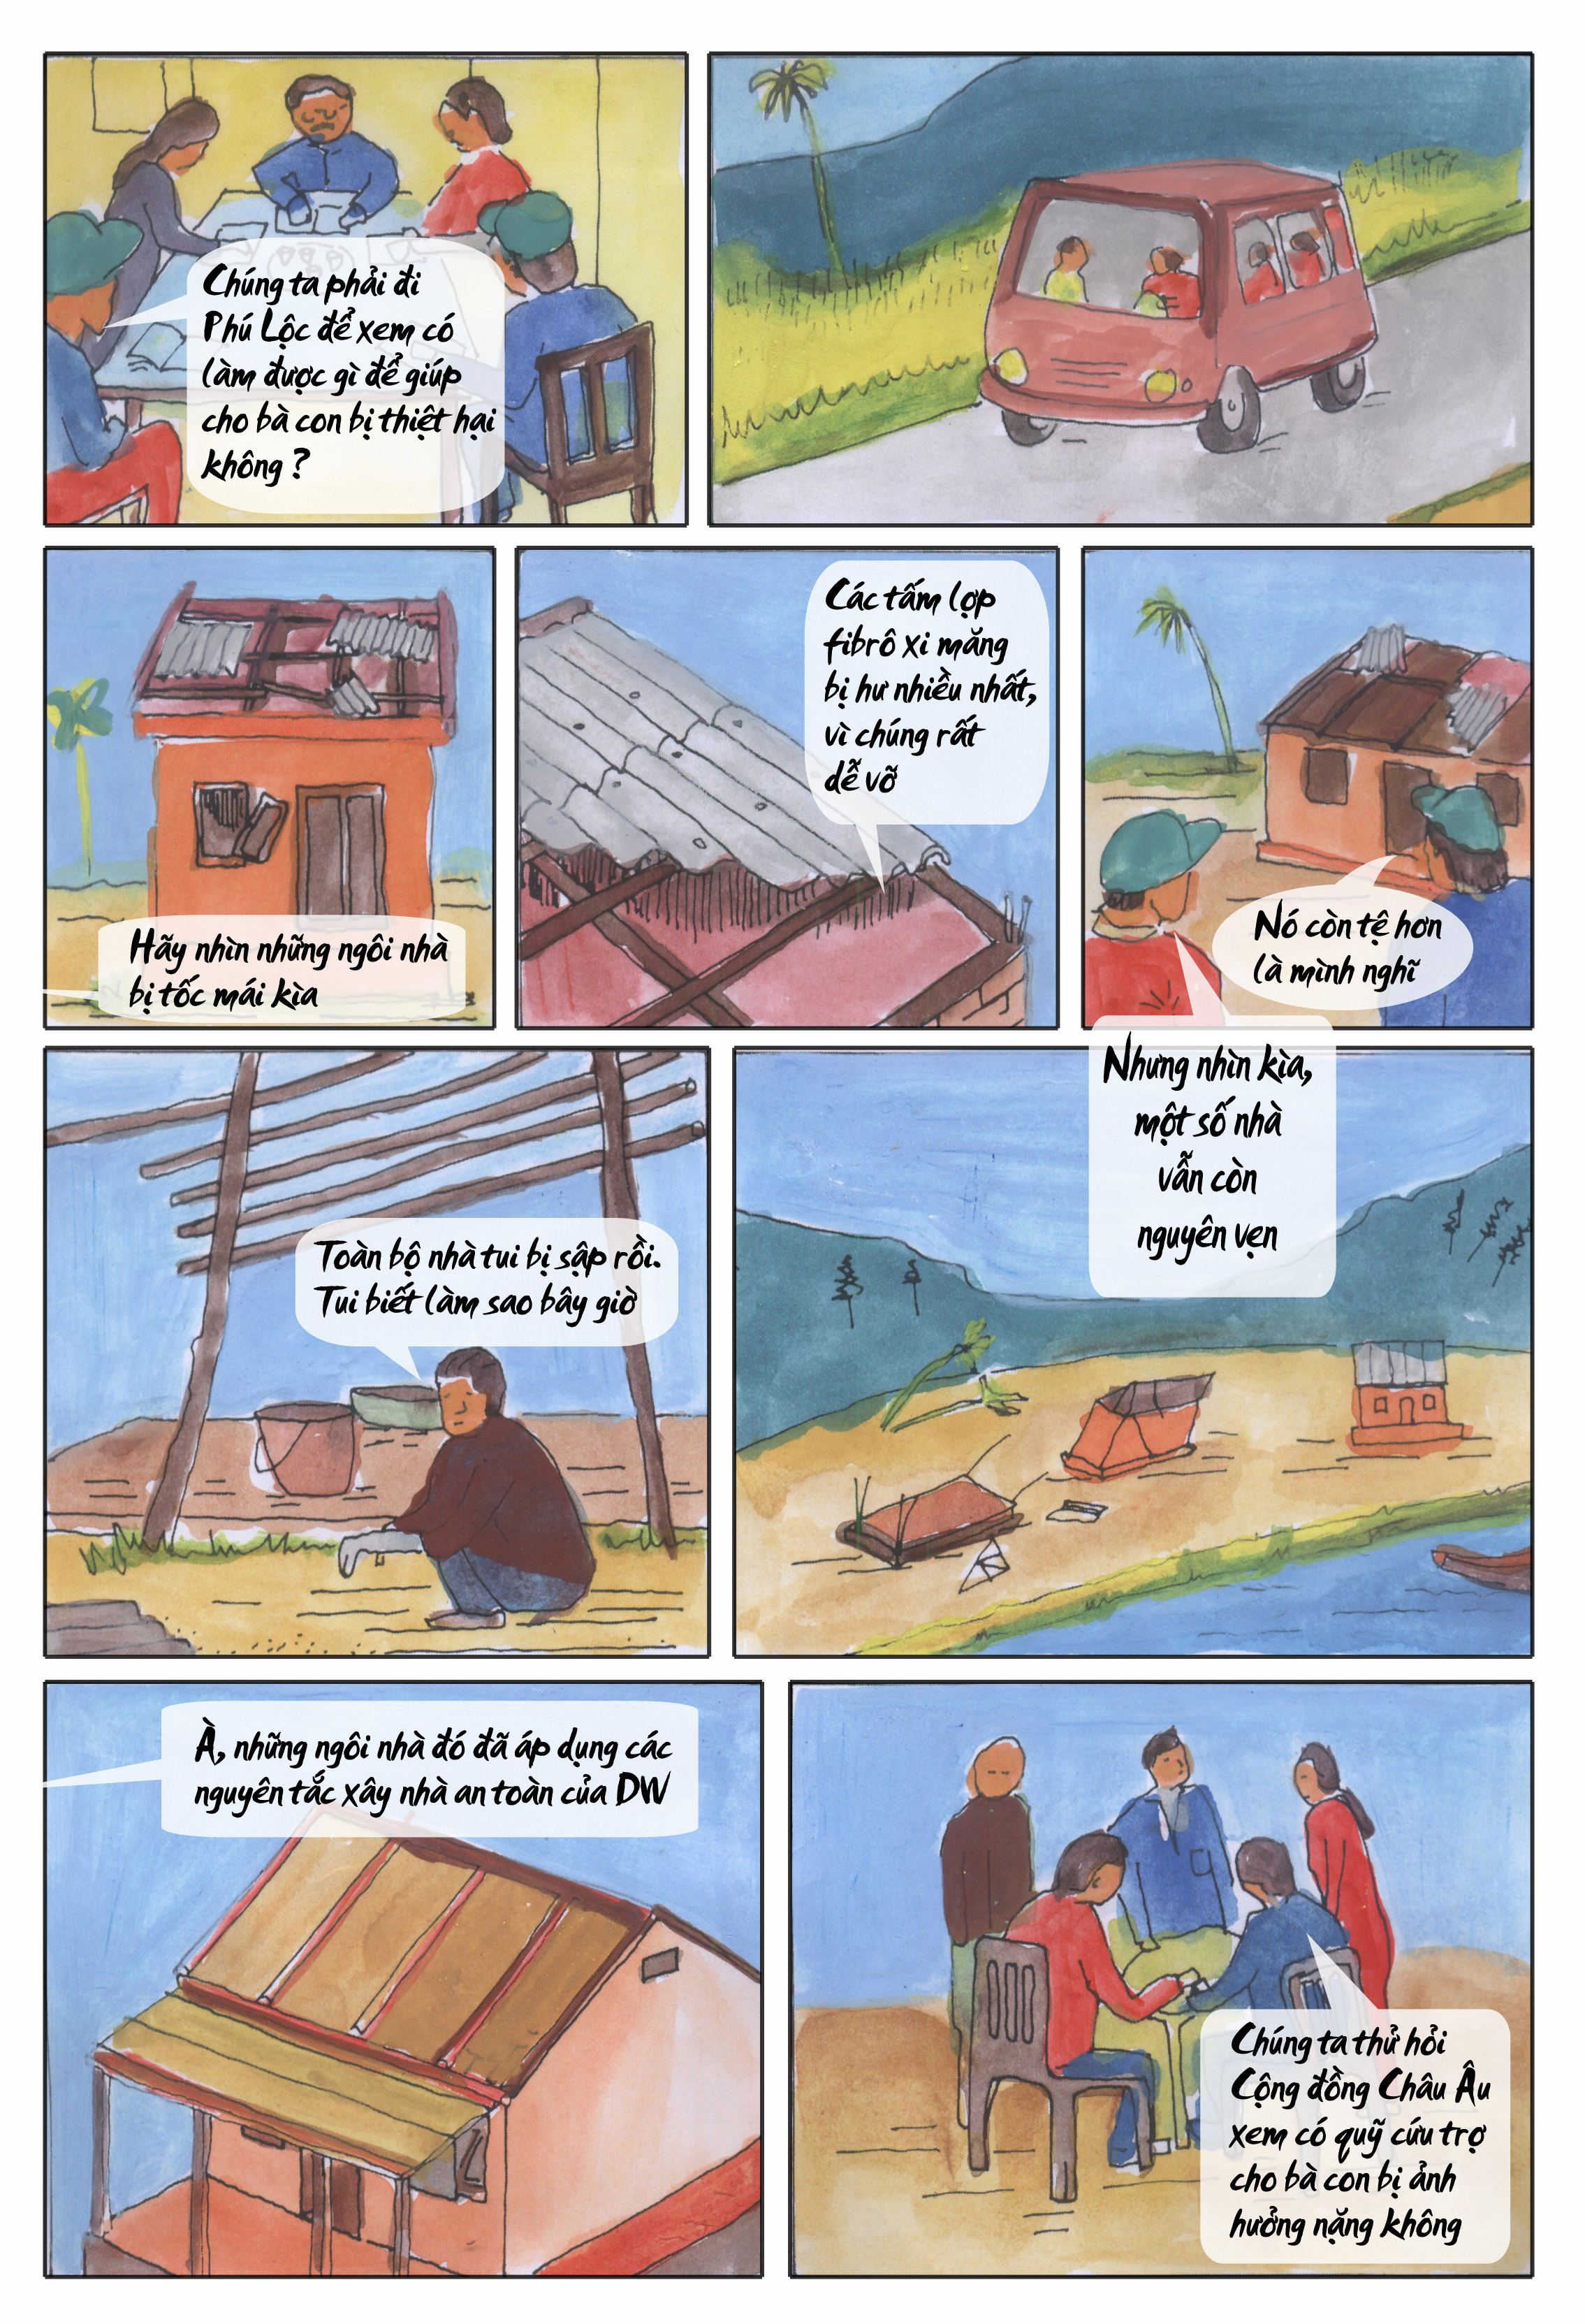 Post Xangsane typhoon Cartoon | DW Digital Archive